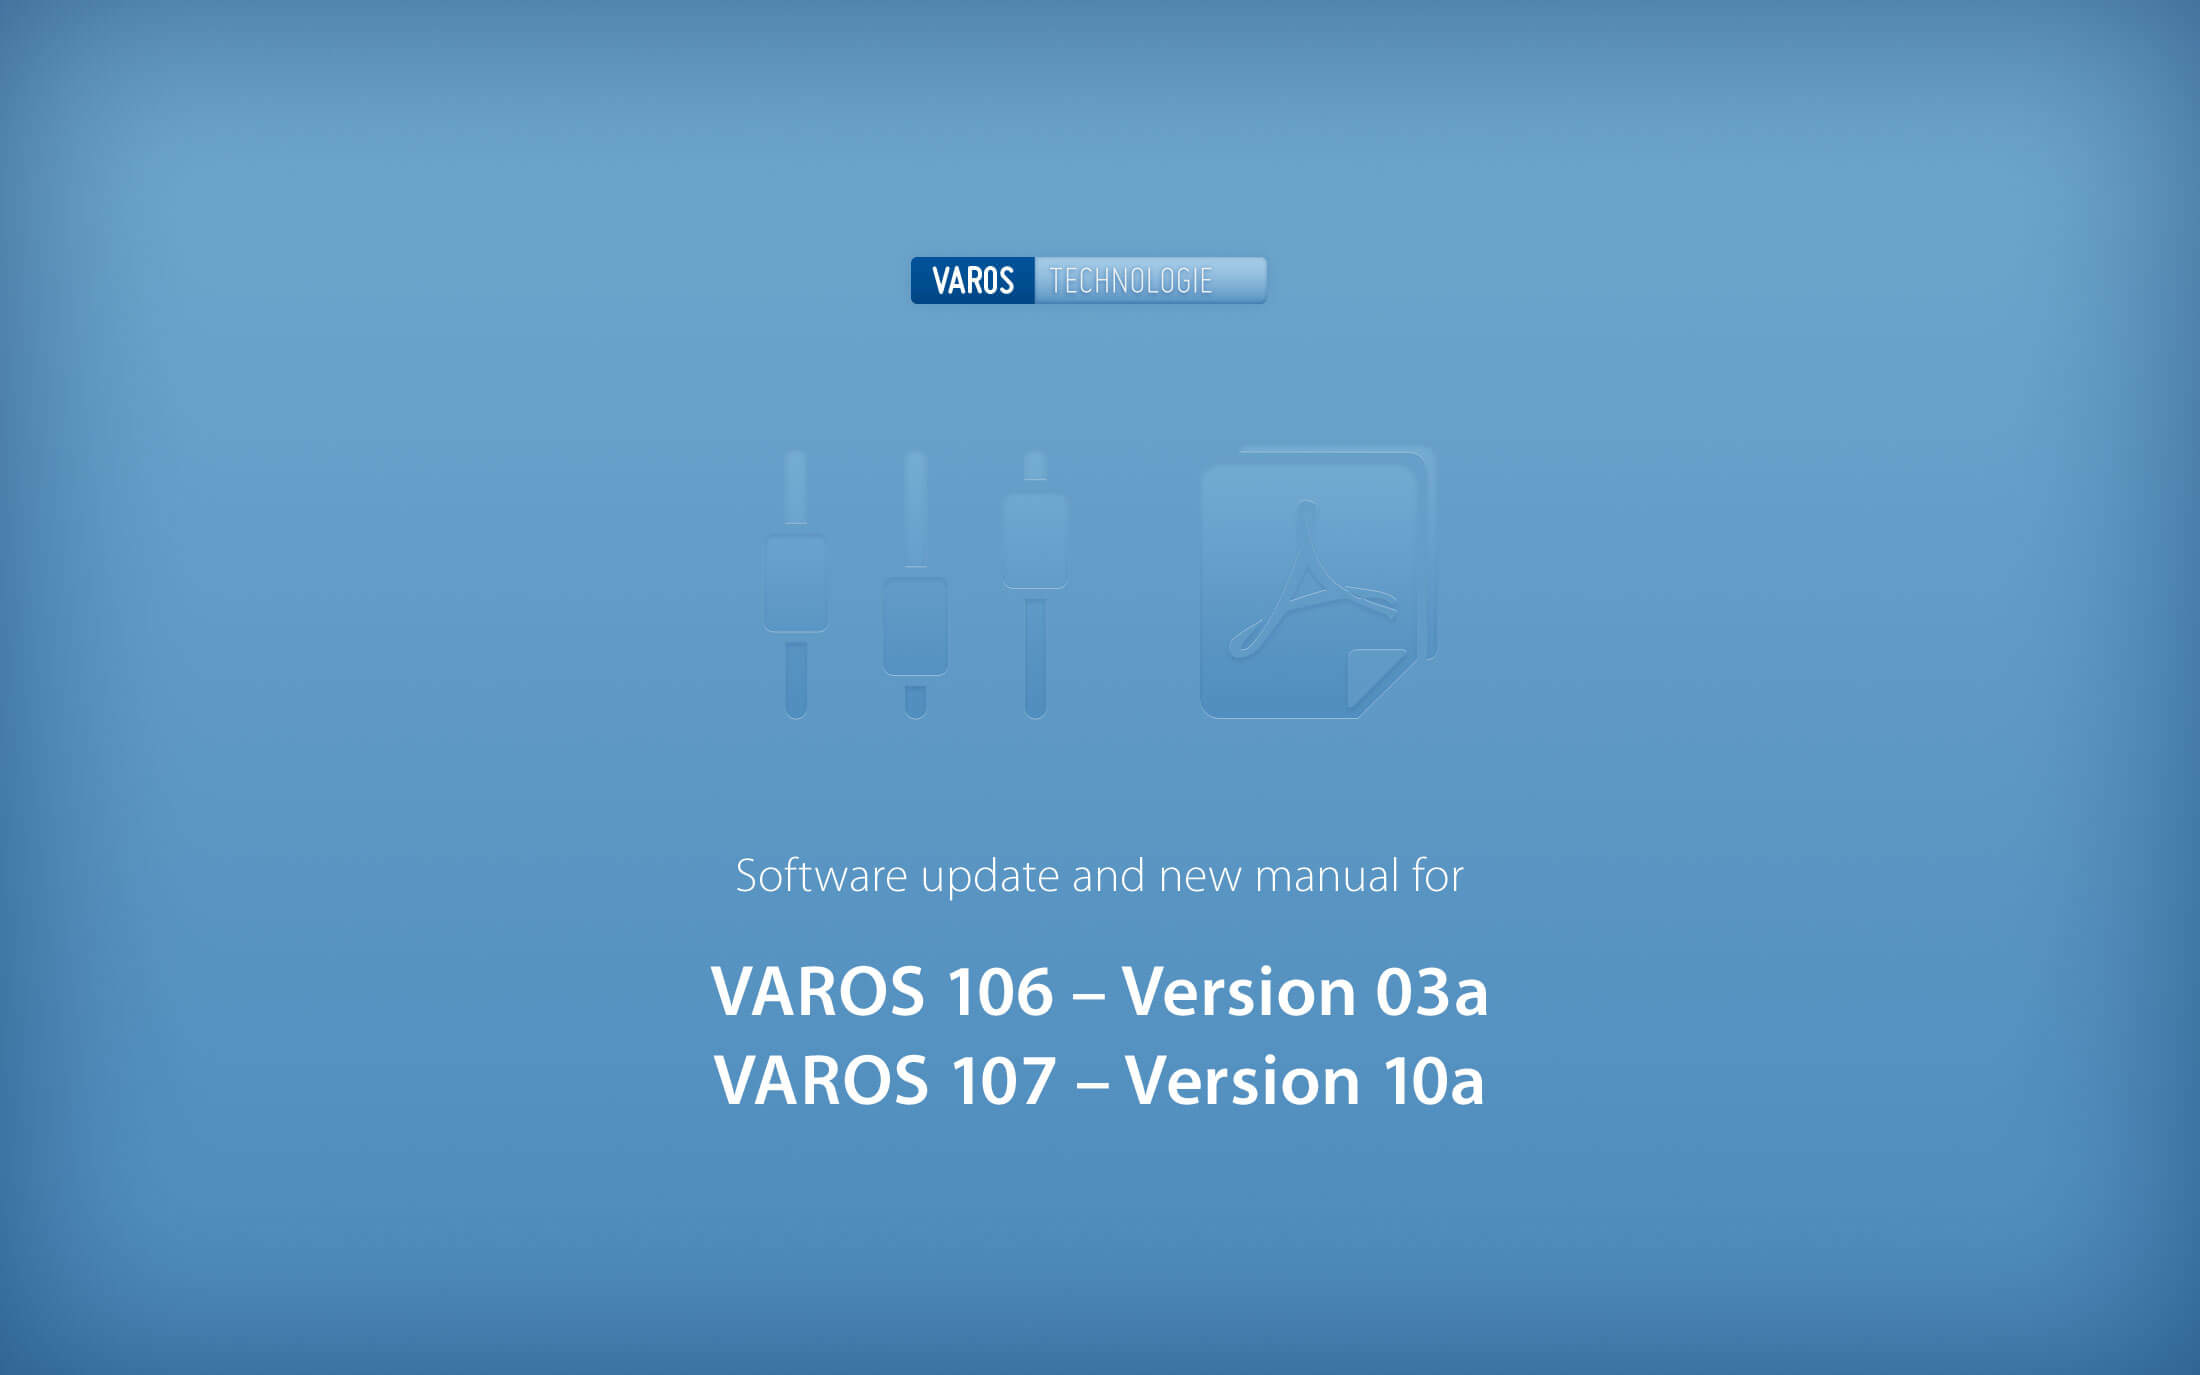 KWS-Electronic news 2017: Software updates and new manual VAROS 106 and VAROS 107